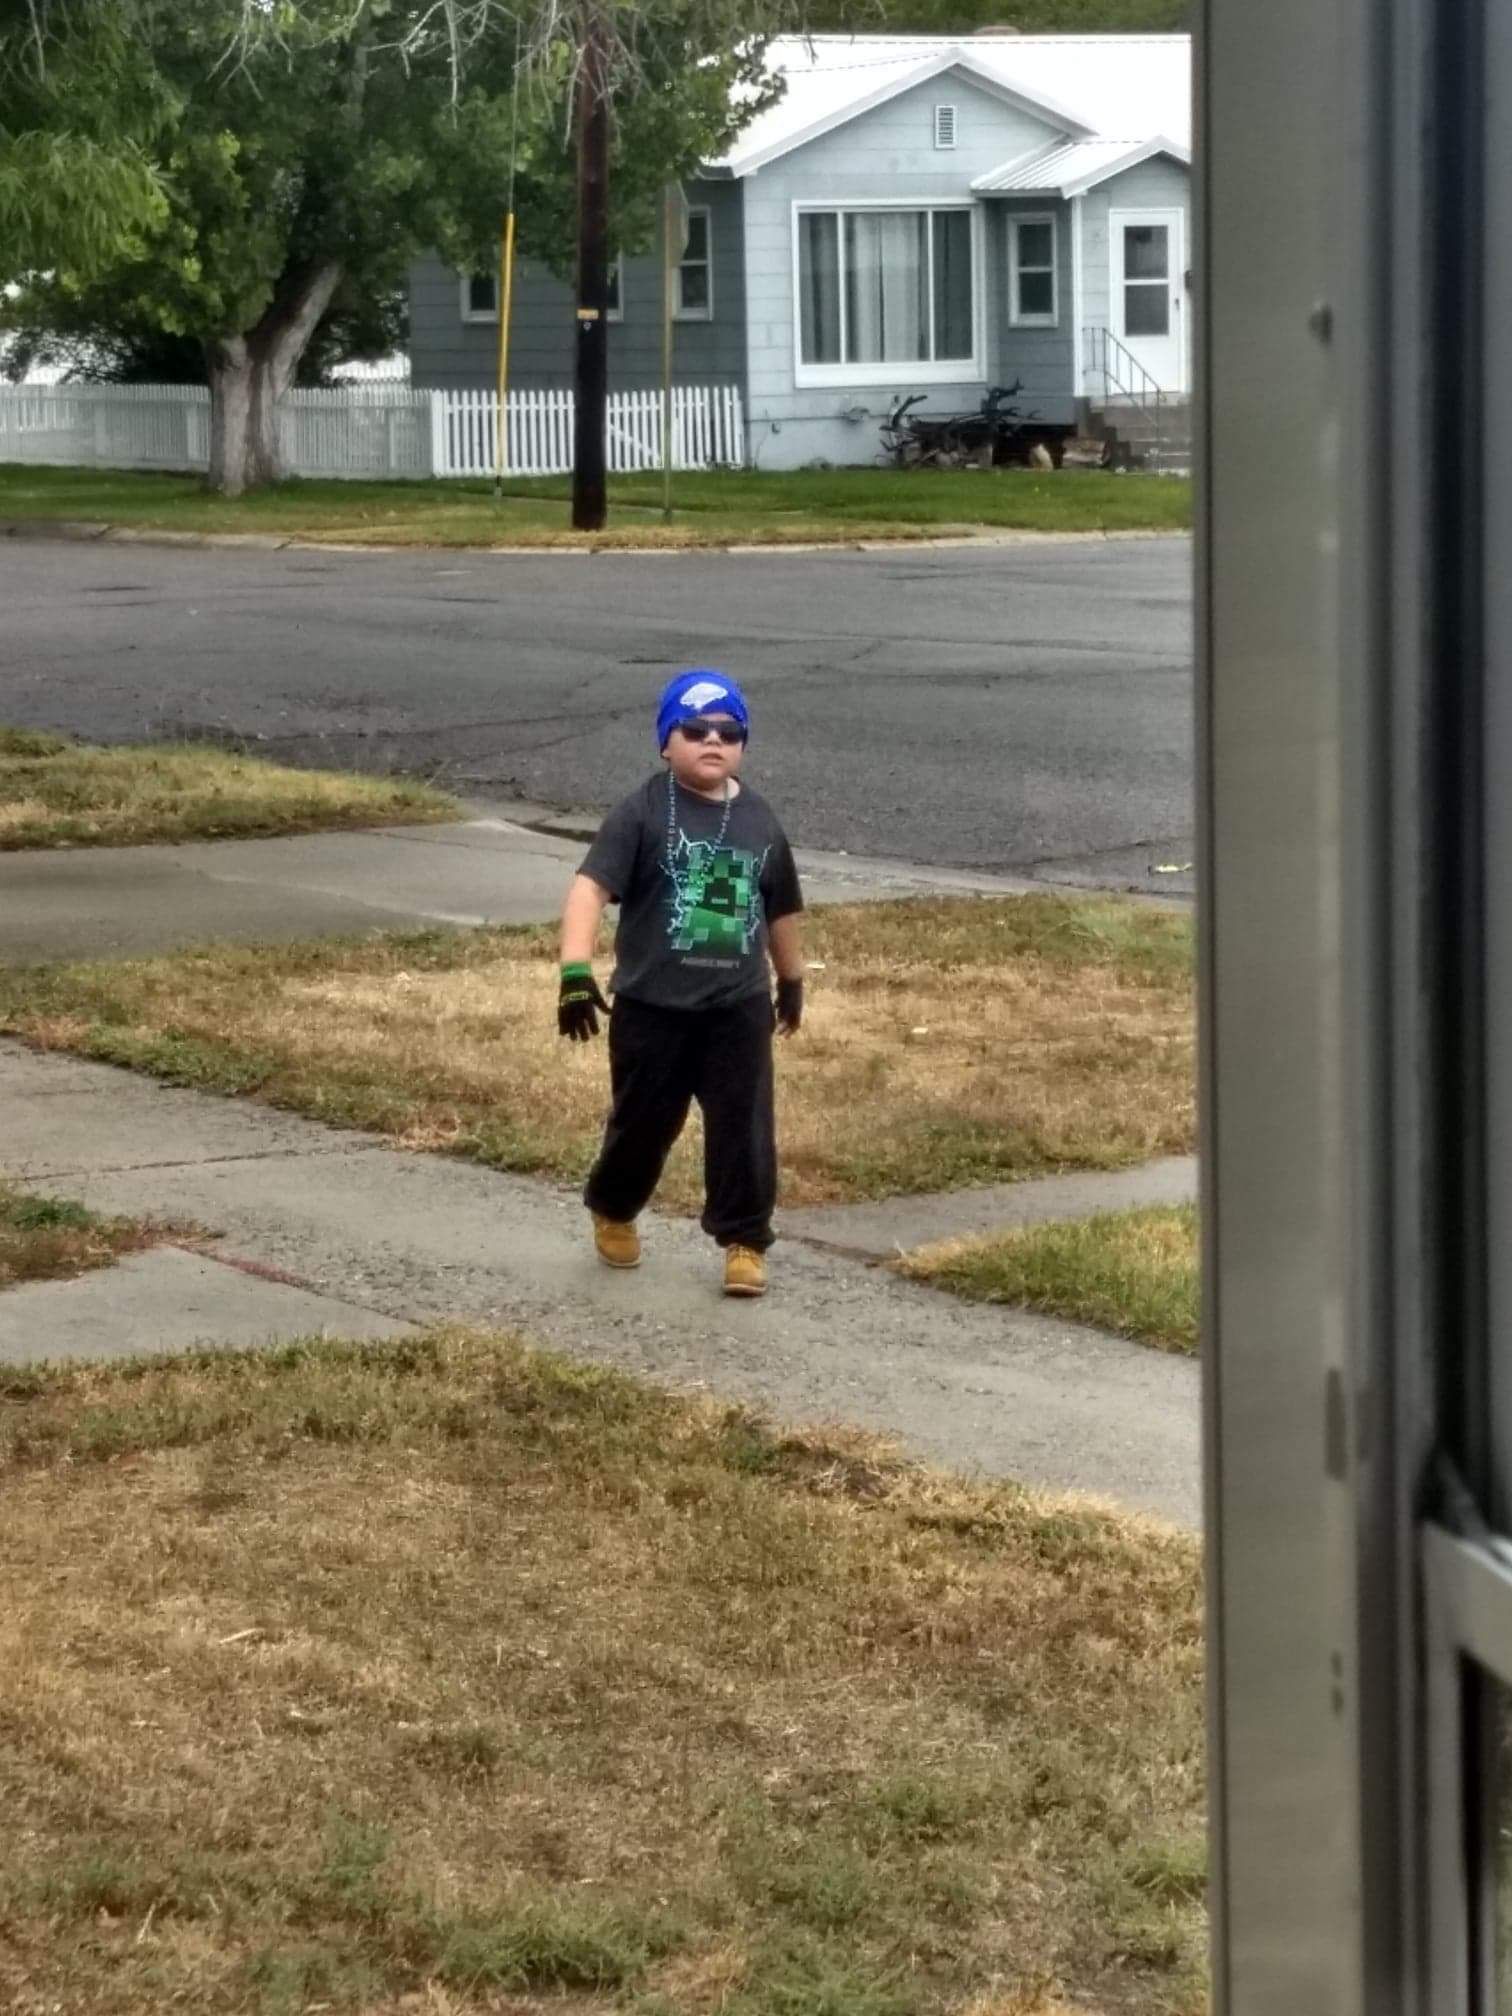 My neighbor's gangsta kid